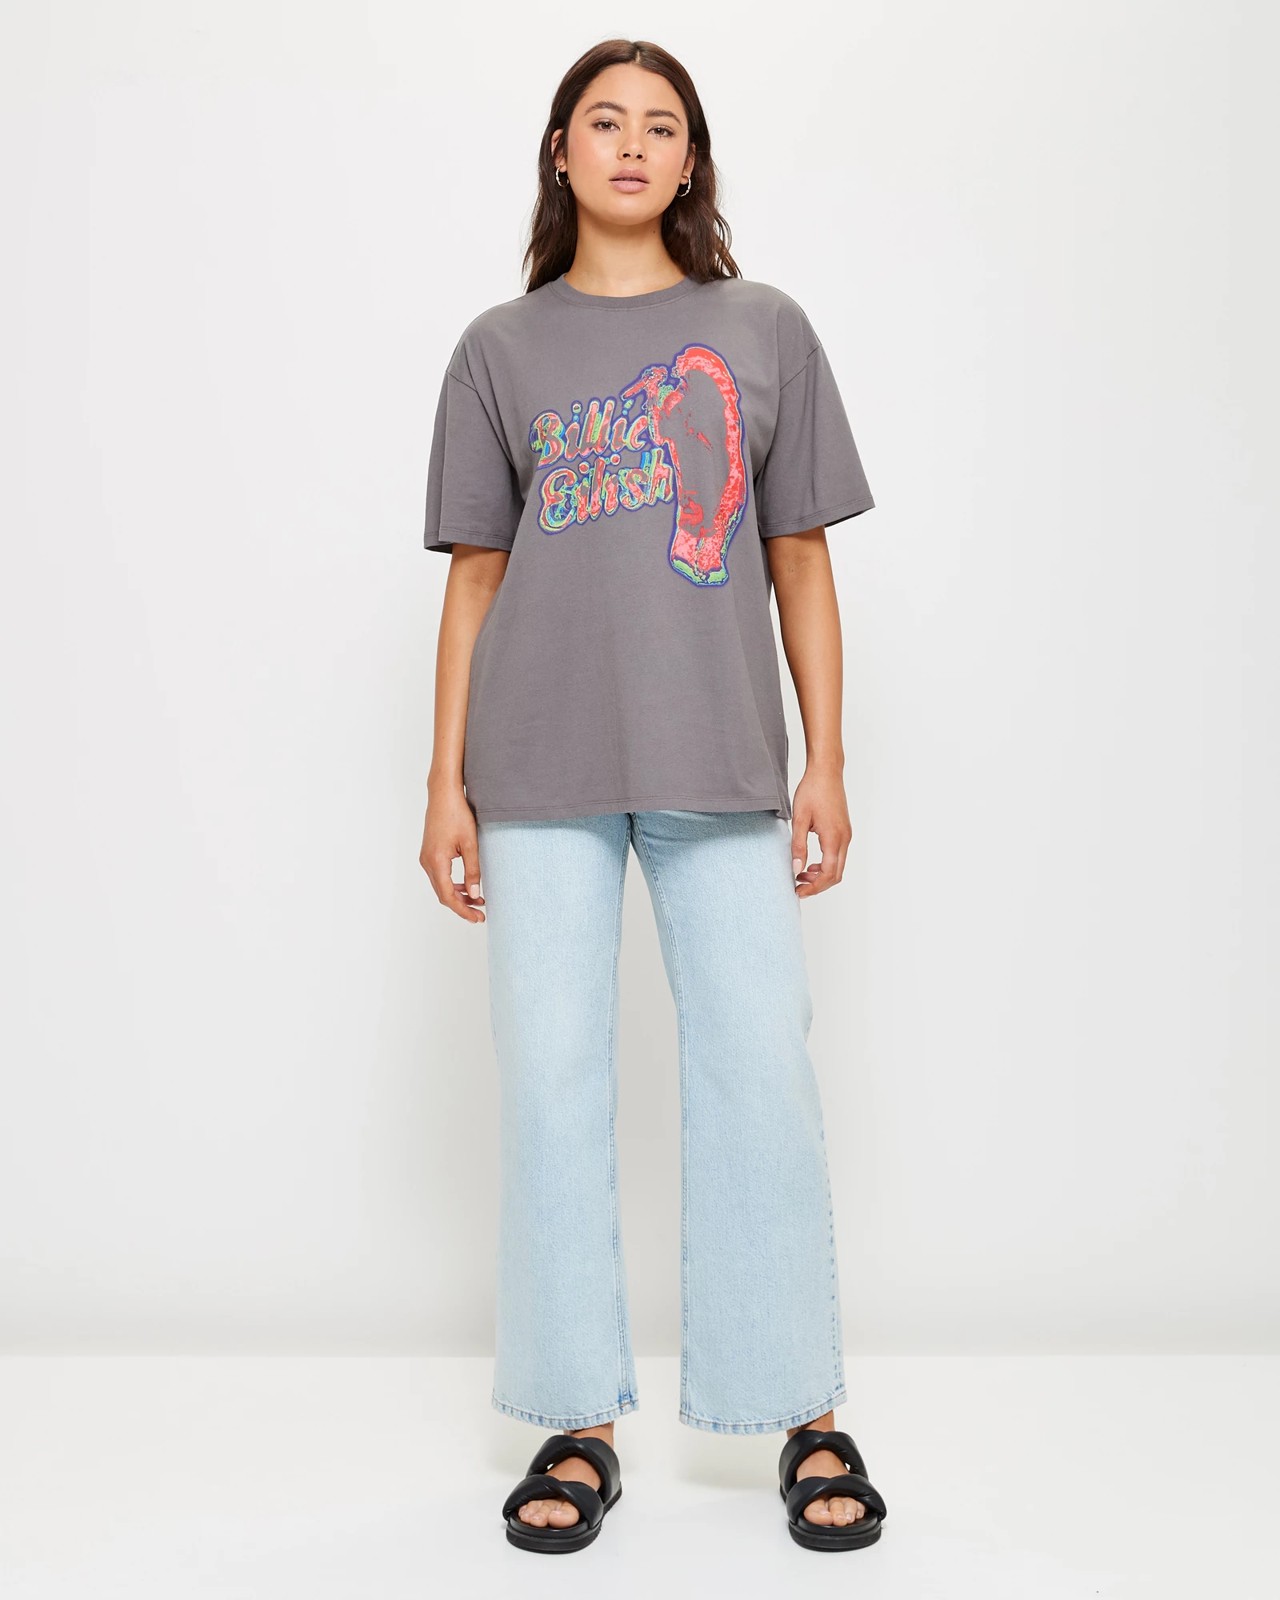 Billie Eilish Oversized T-Shirt | Target Australia